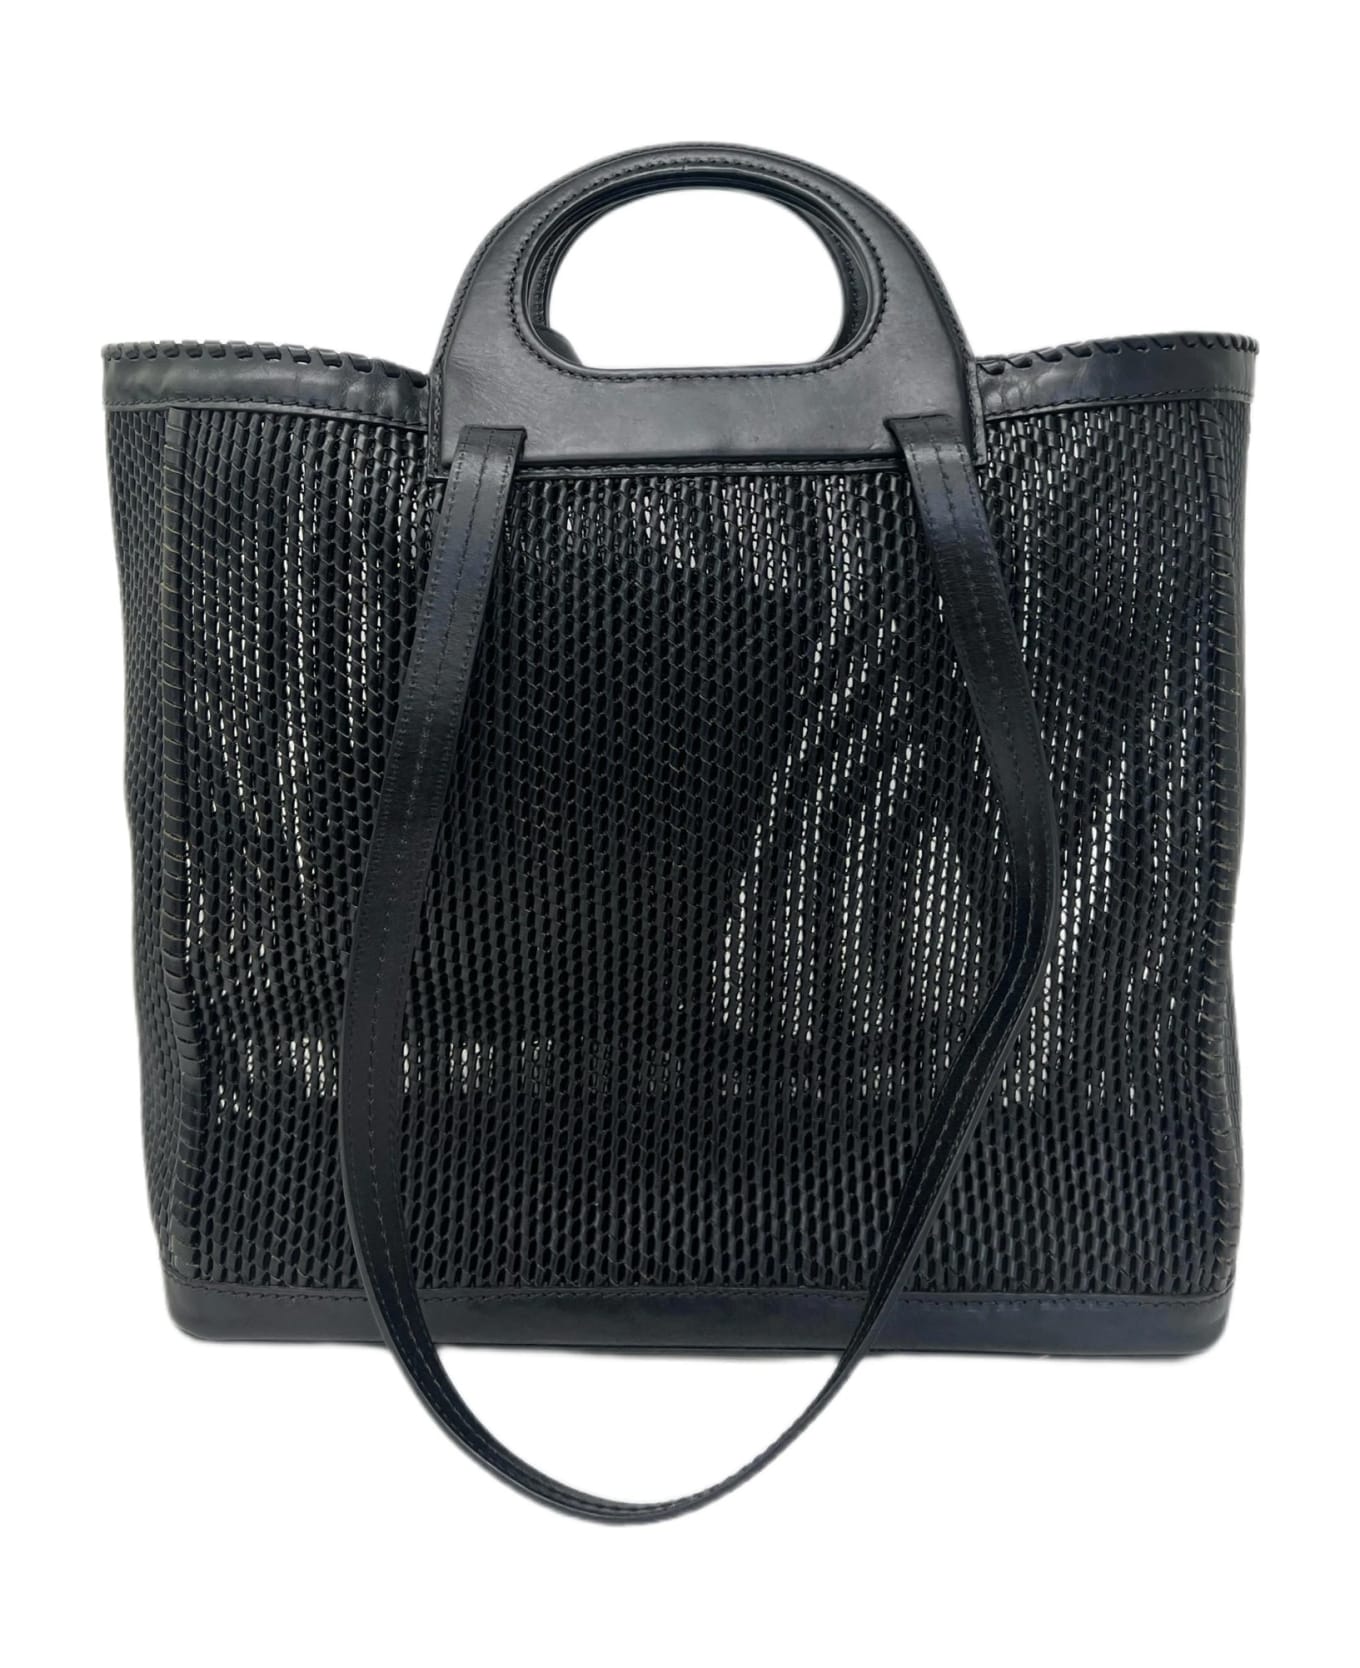 Max Mara Accessori Queen Leather Bag - Black